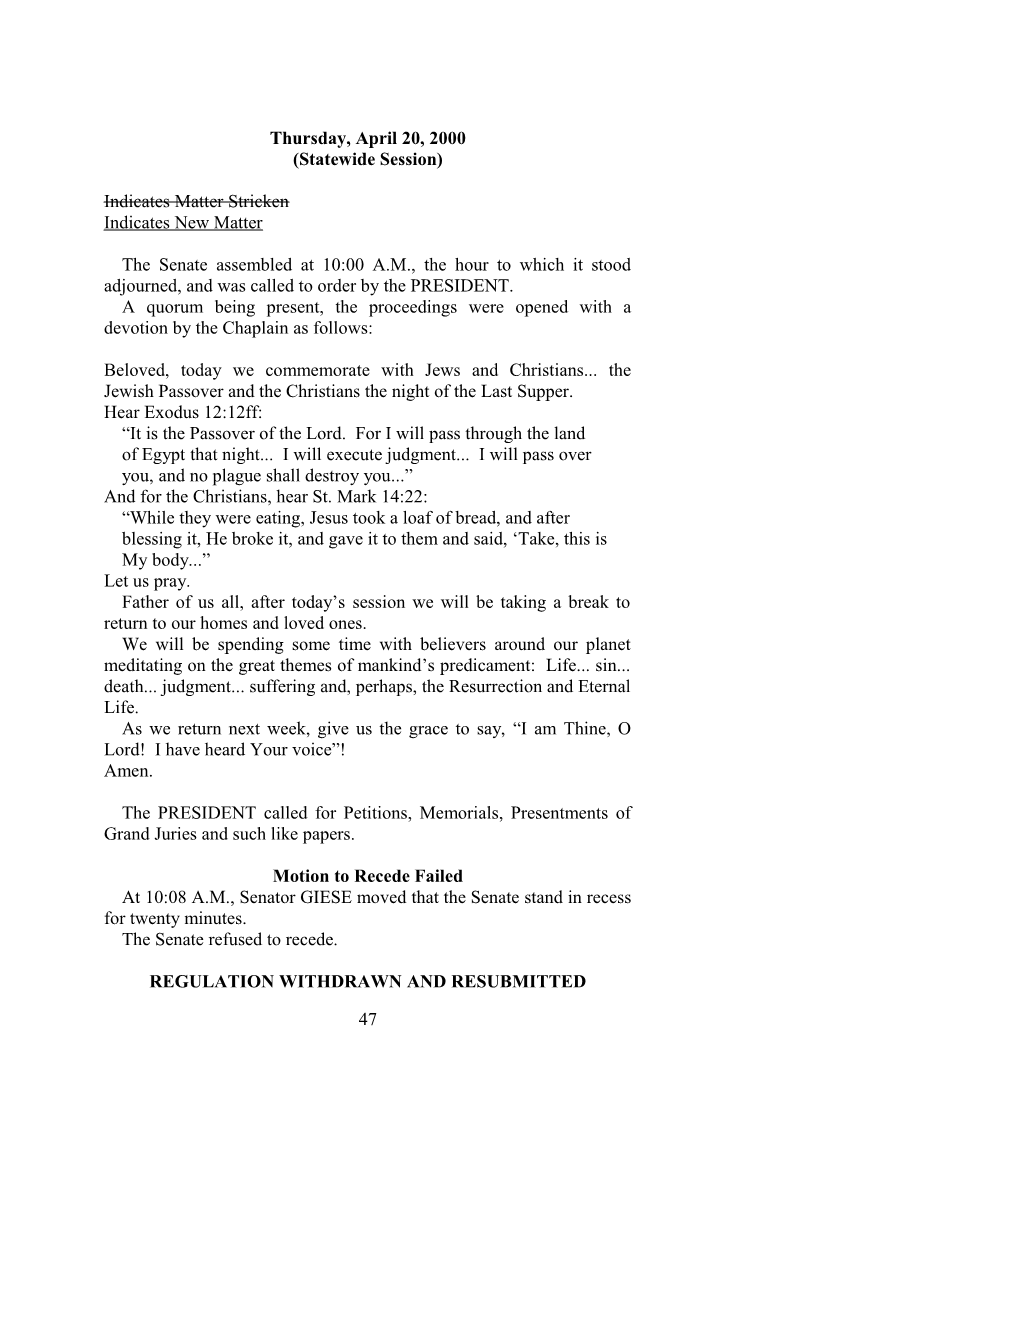 Senate Journal for Apr. 20, 2000 - South Carolina Legislature Online